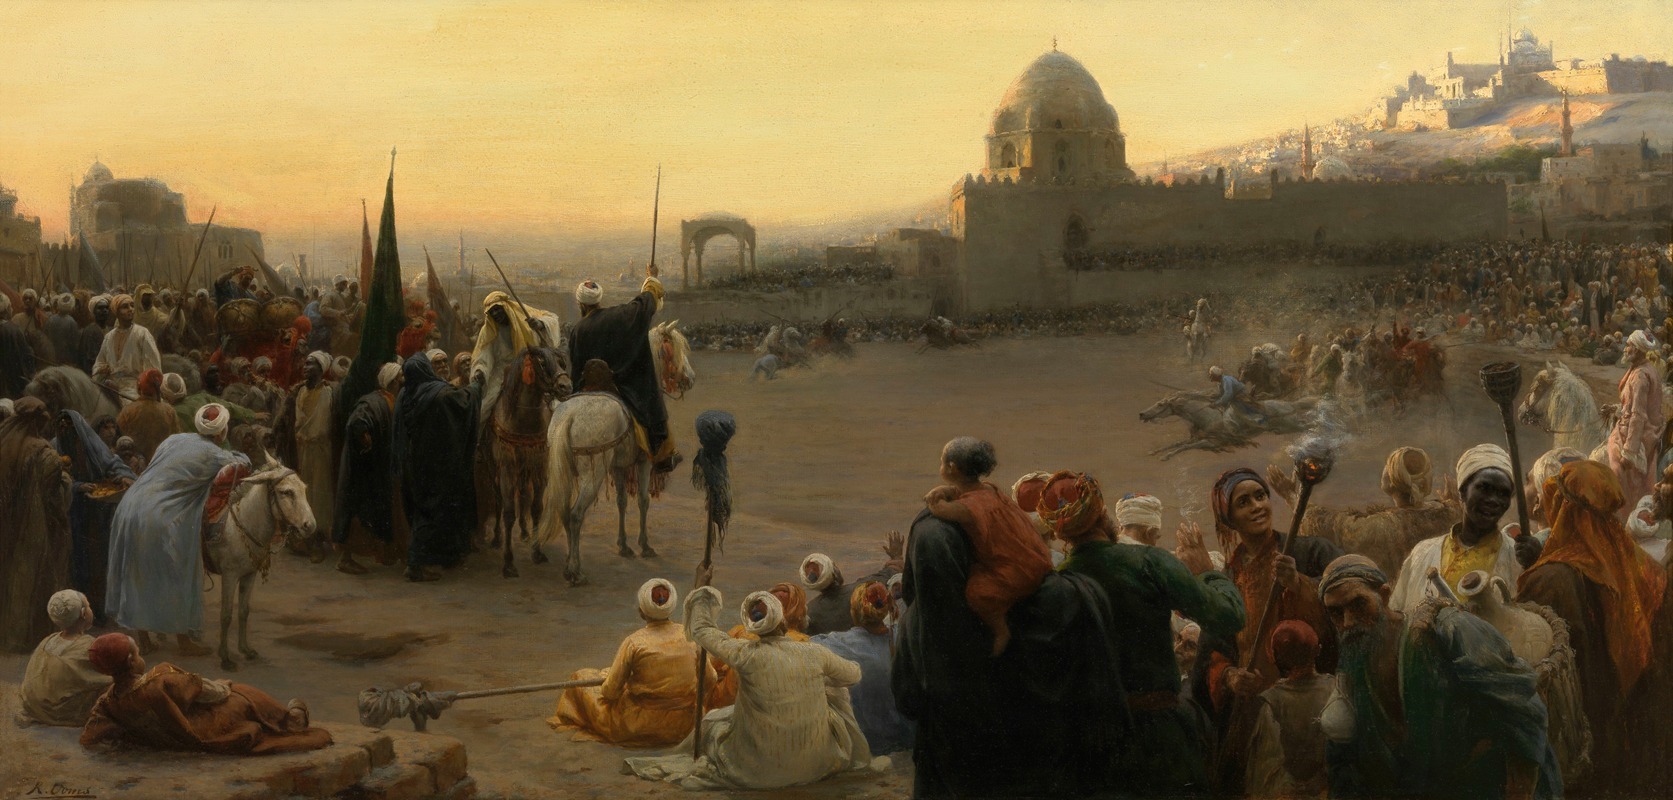 Karel Ooms - Fantasia in Egypt